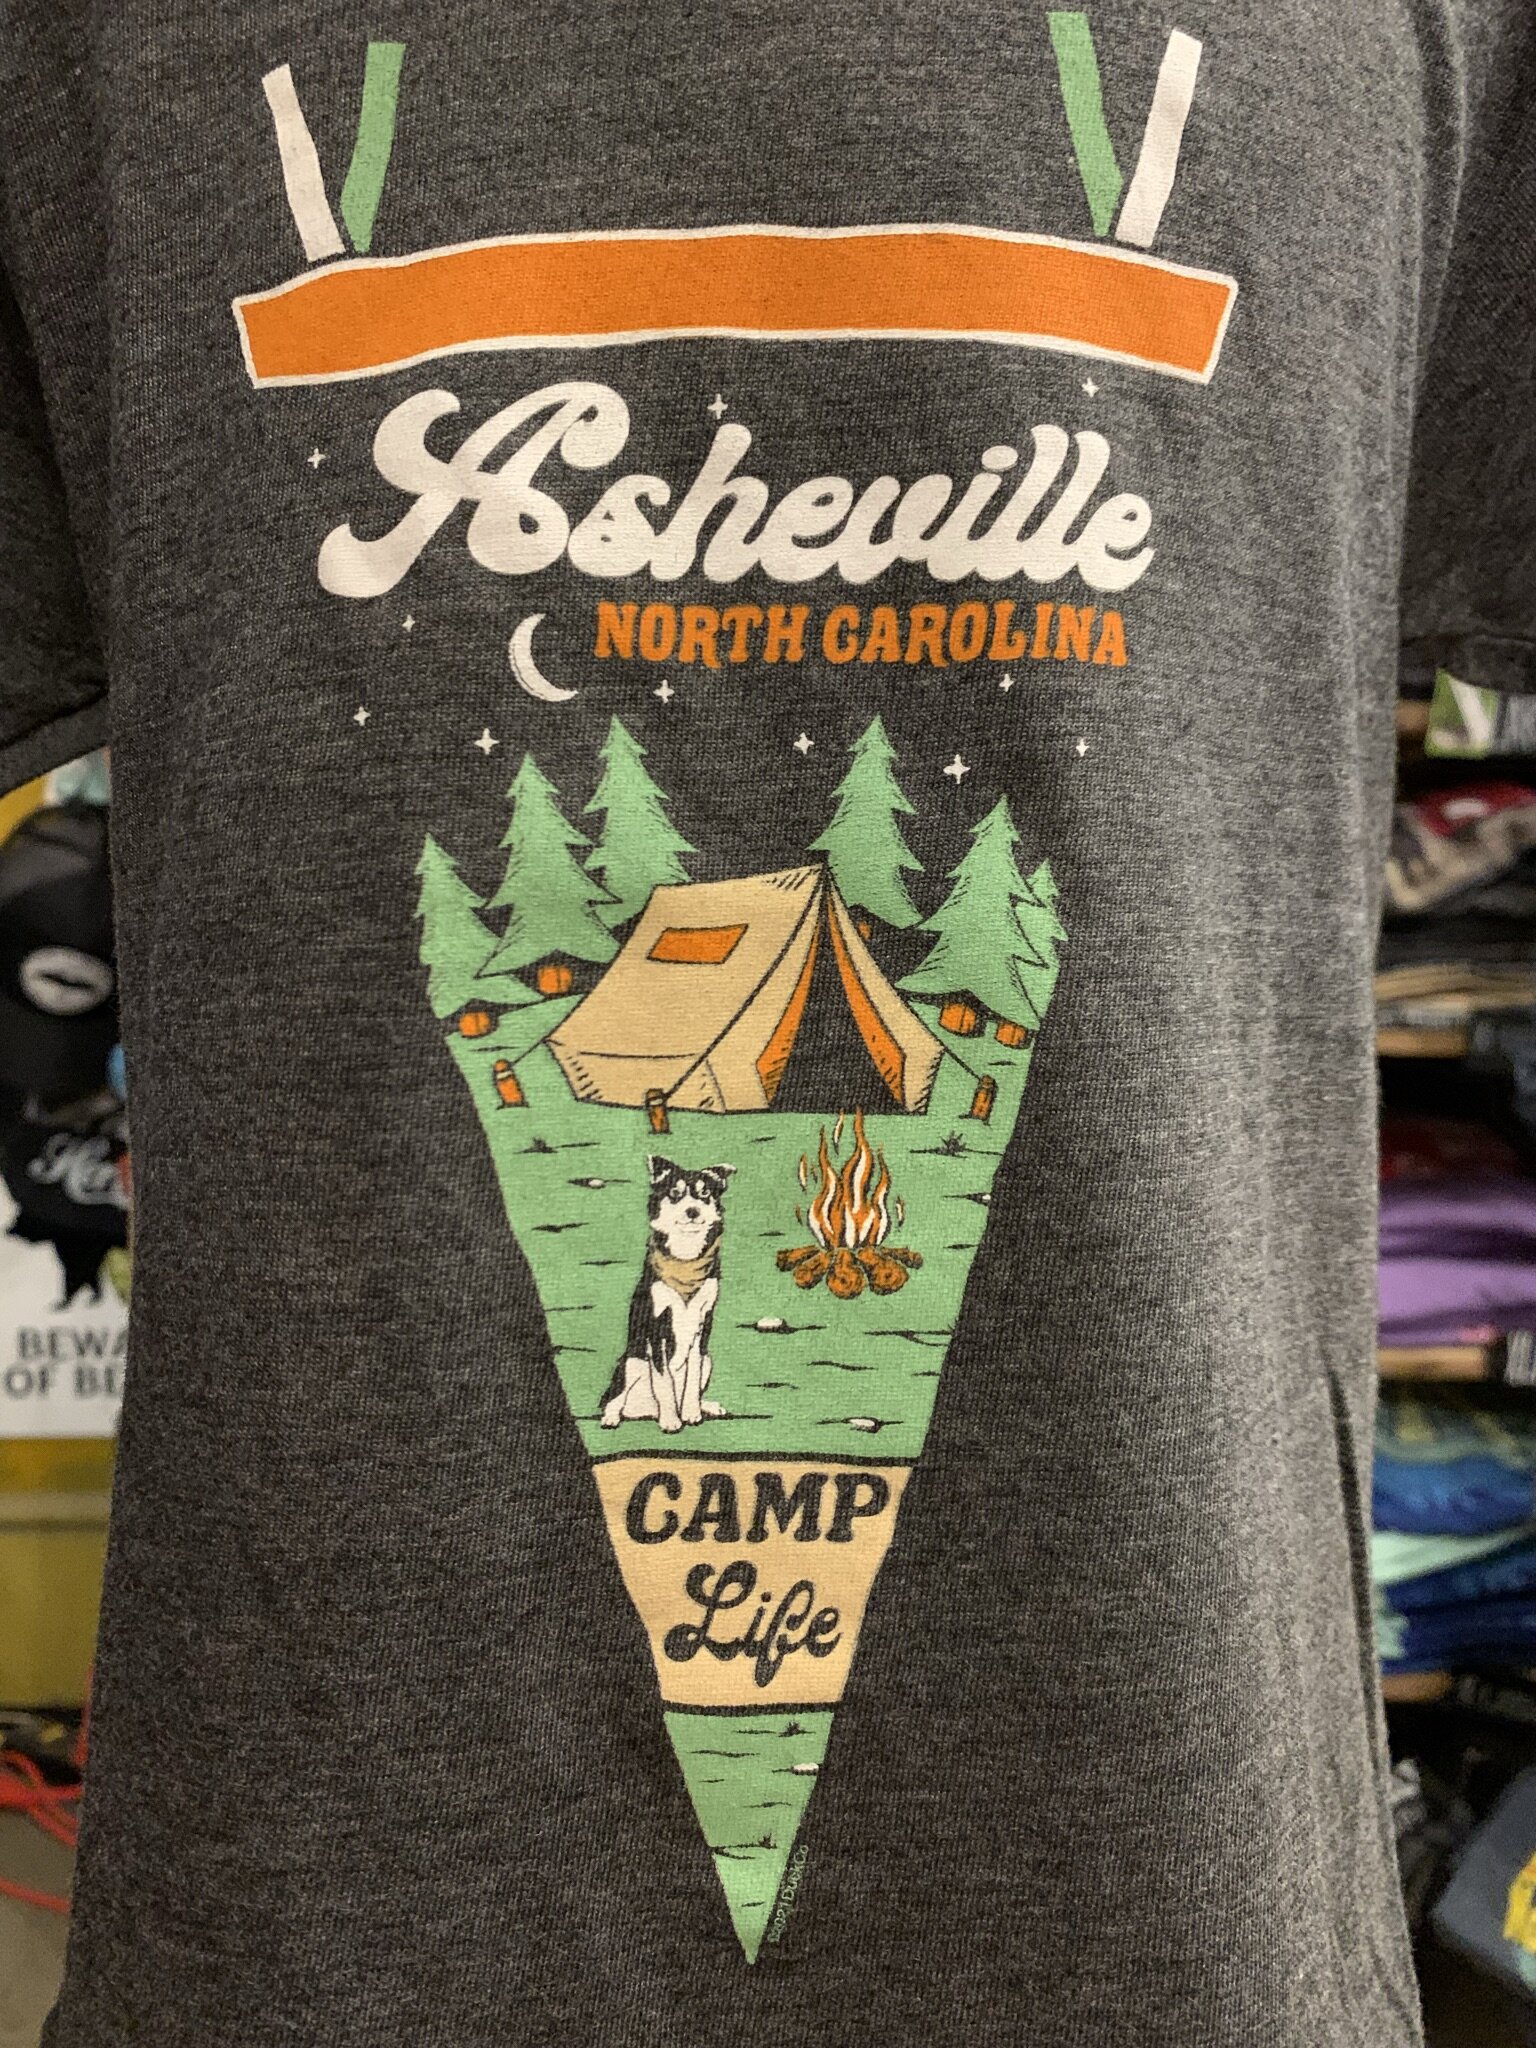 Retro Mountain Asheville Kid's T-Shirt North Carolina Youth Shirt Asheville